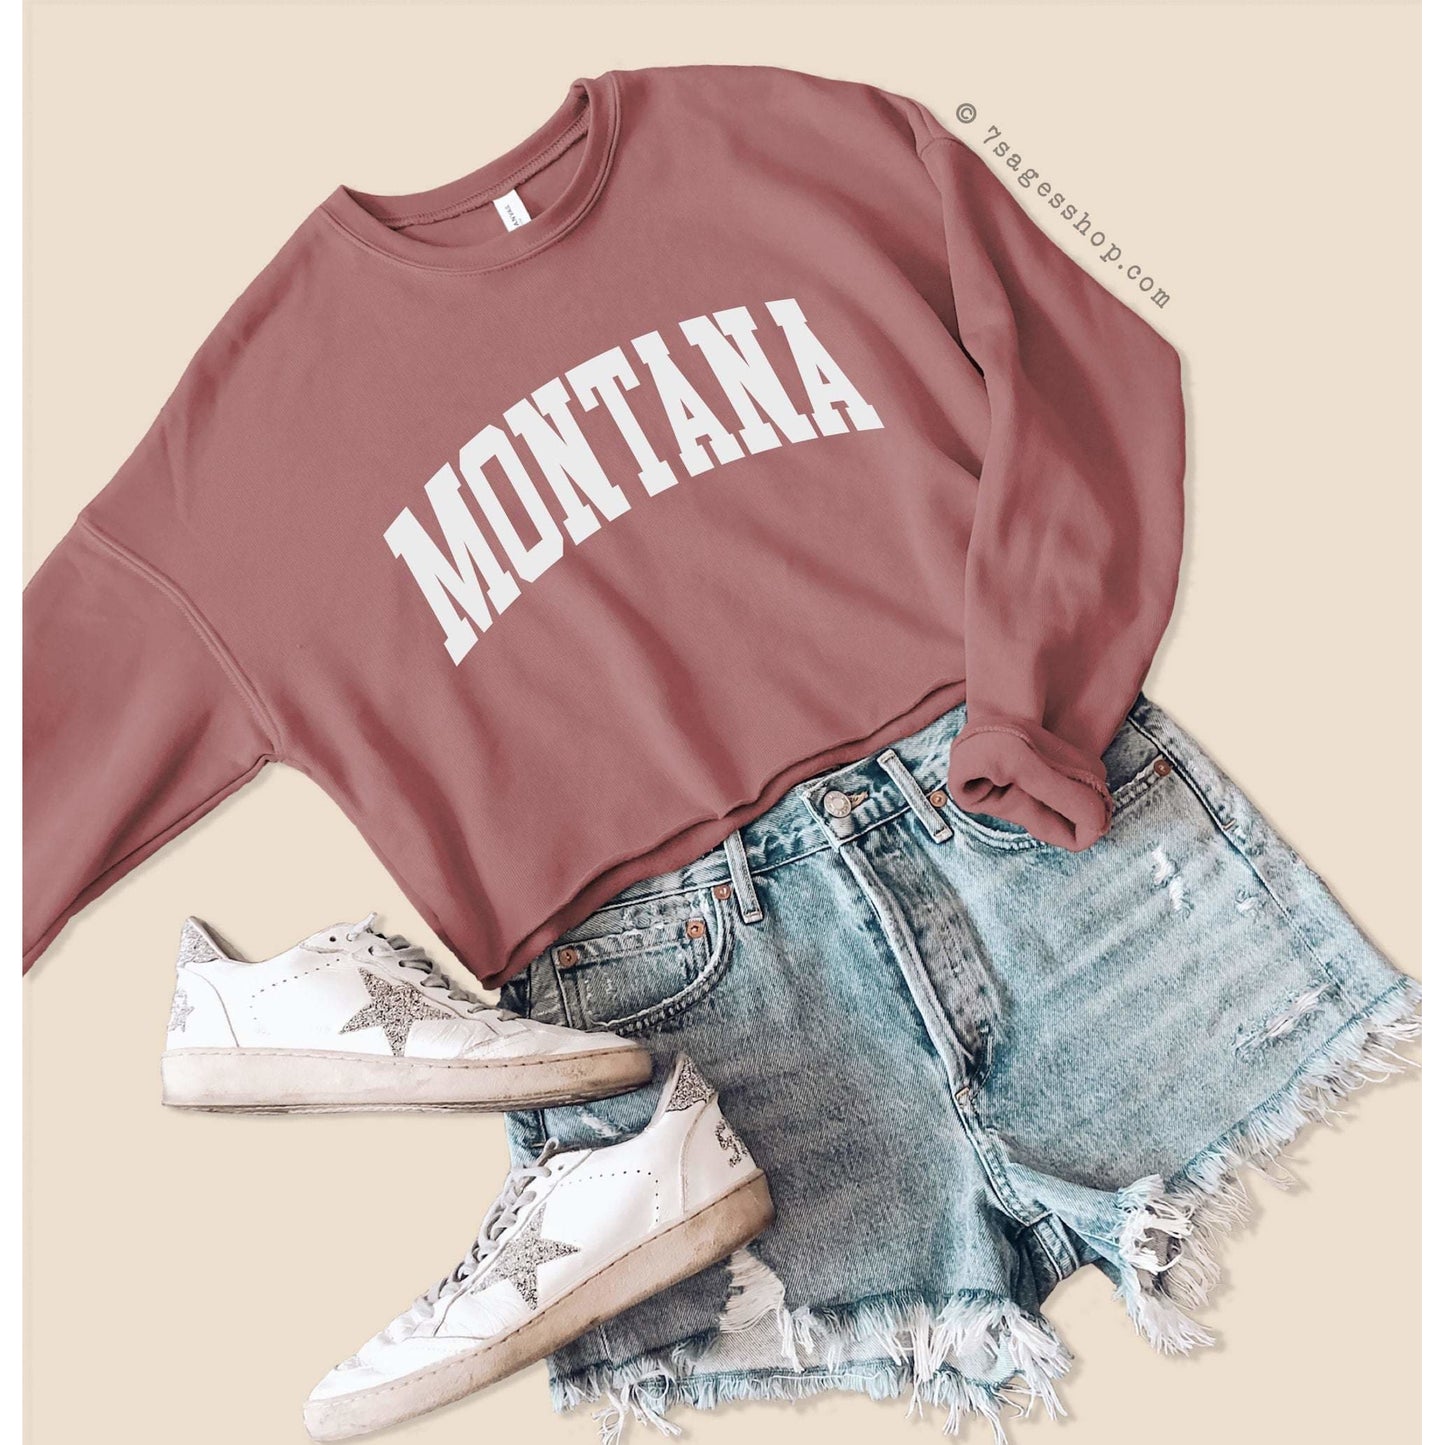 Montana Sweatshirt - Montana State University Cropped Sweatshirt - Montana Shirts - University of Montana Crop Top - Montana State